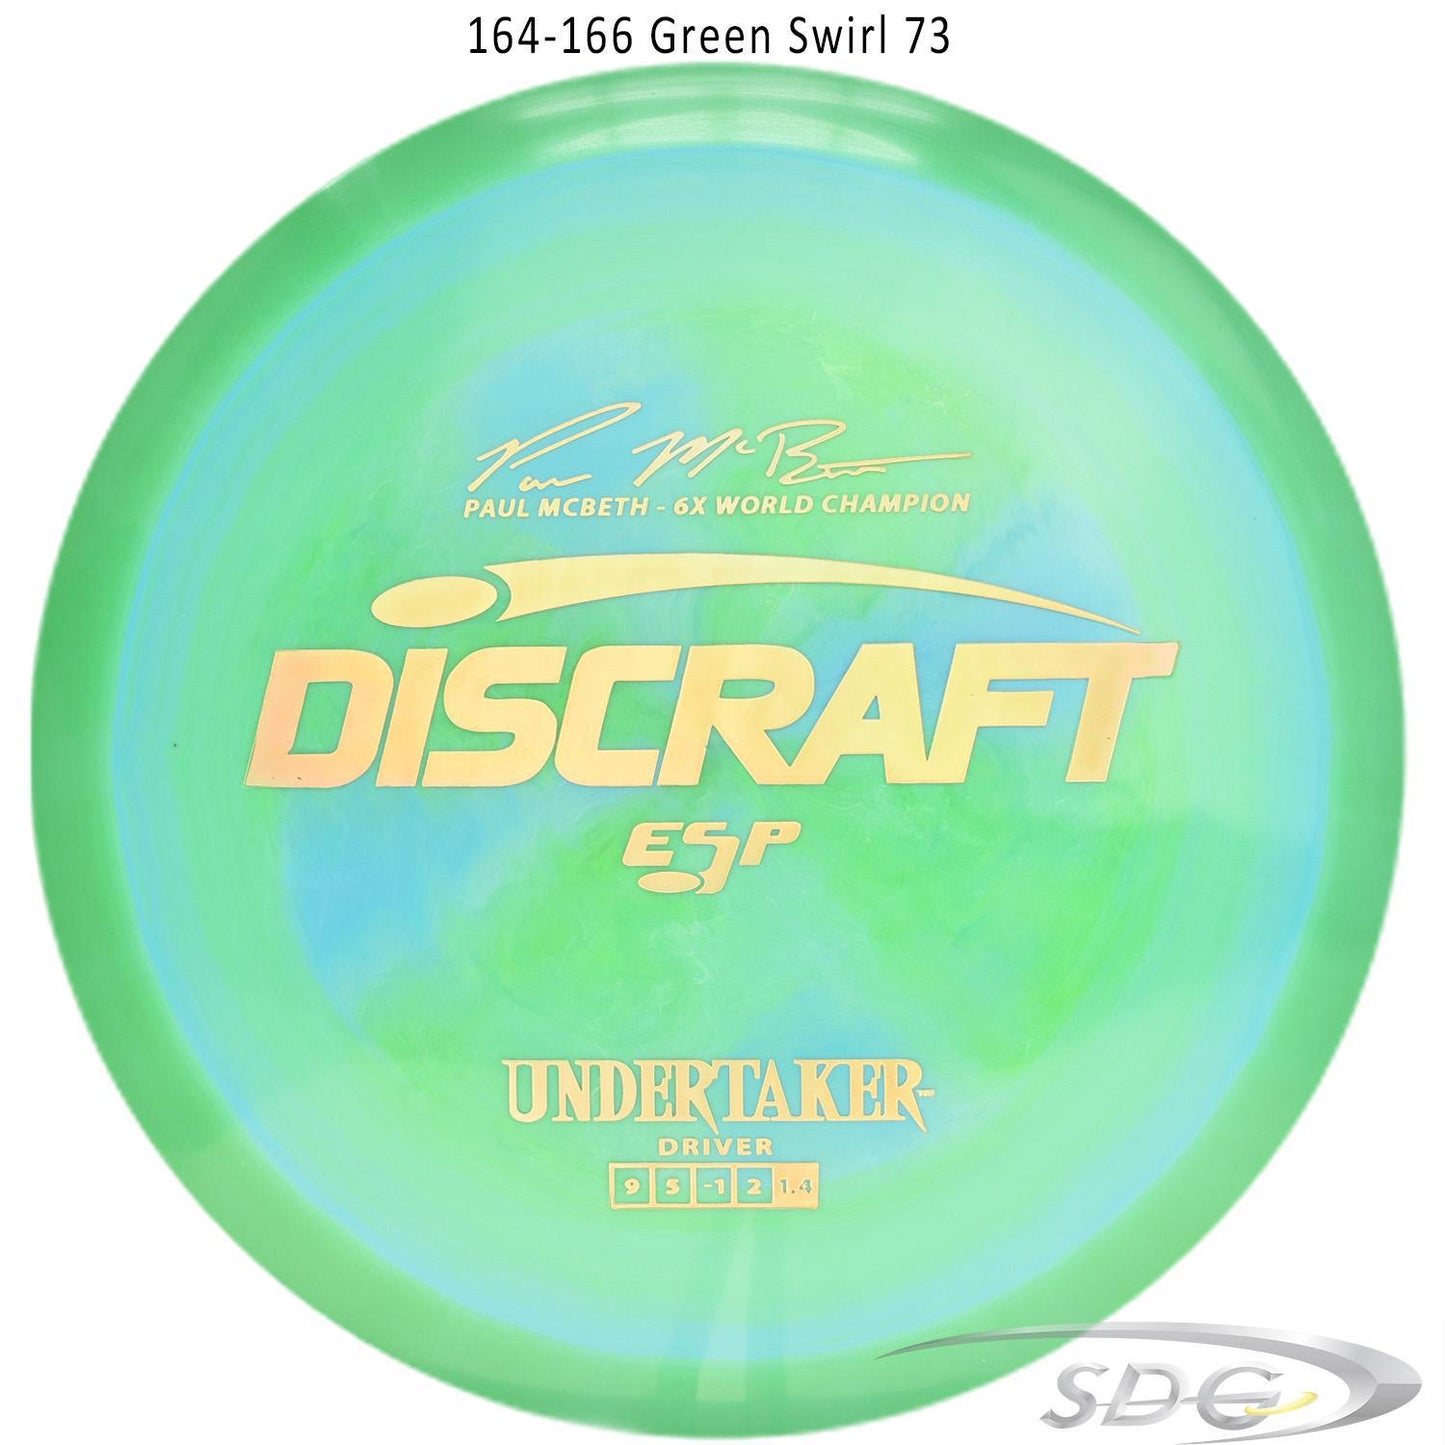 discraft-esp-undertaker-6x-paul-mcbeth-signature-series-disc-golf-distance-driver-169-160-weights 164-166 Green Swirl 73 